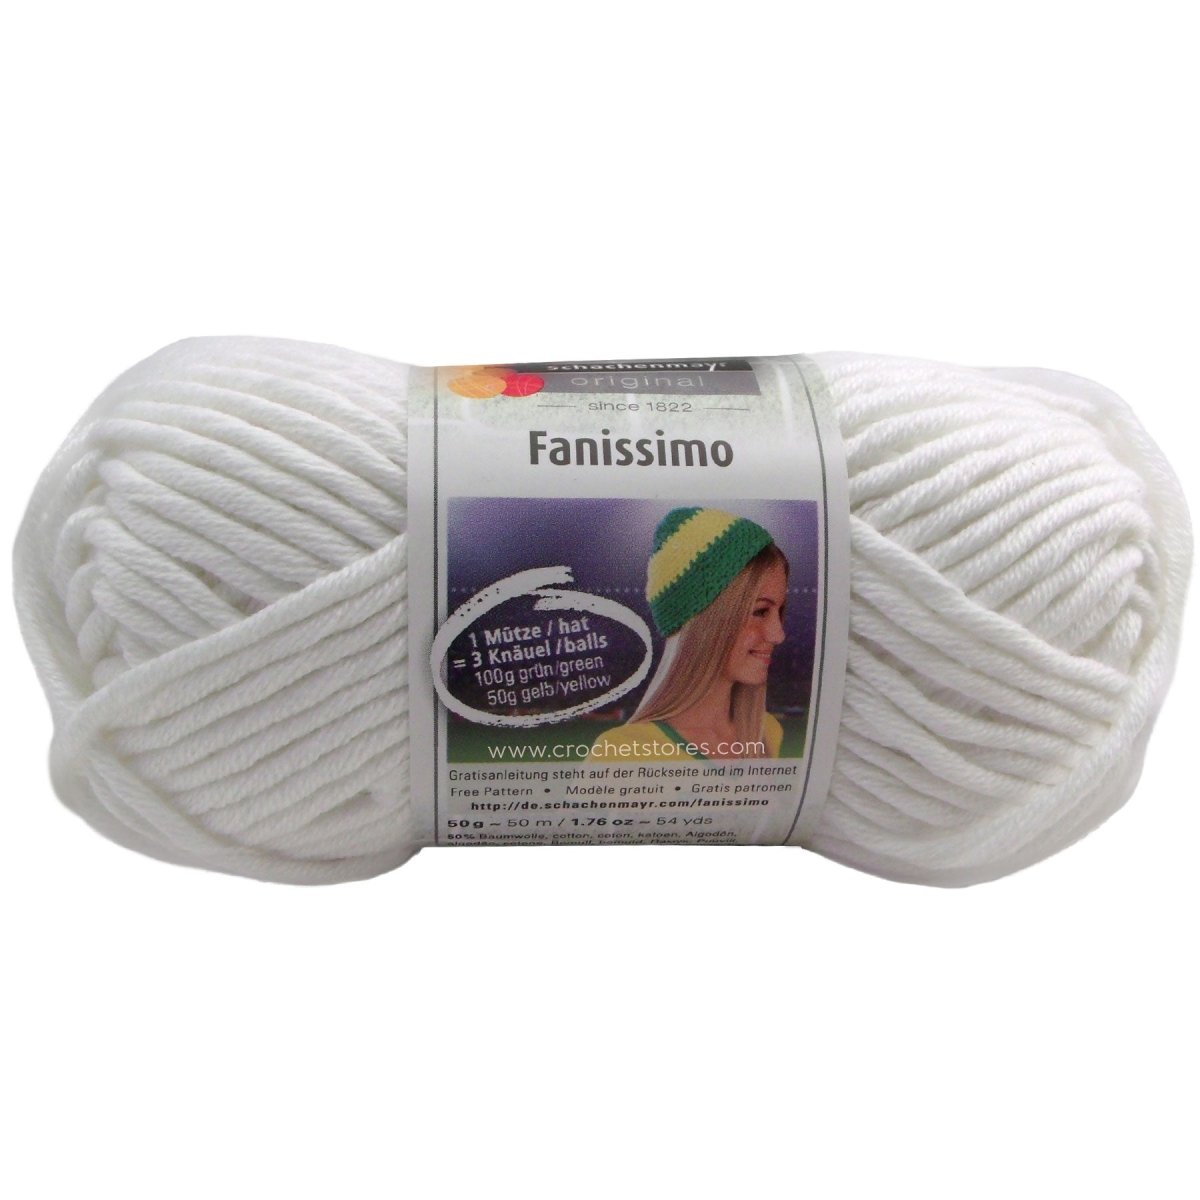 FANISSIMO - Crochetstores9807335-3014053859027854